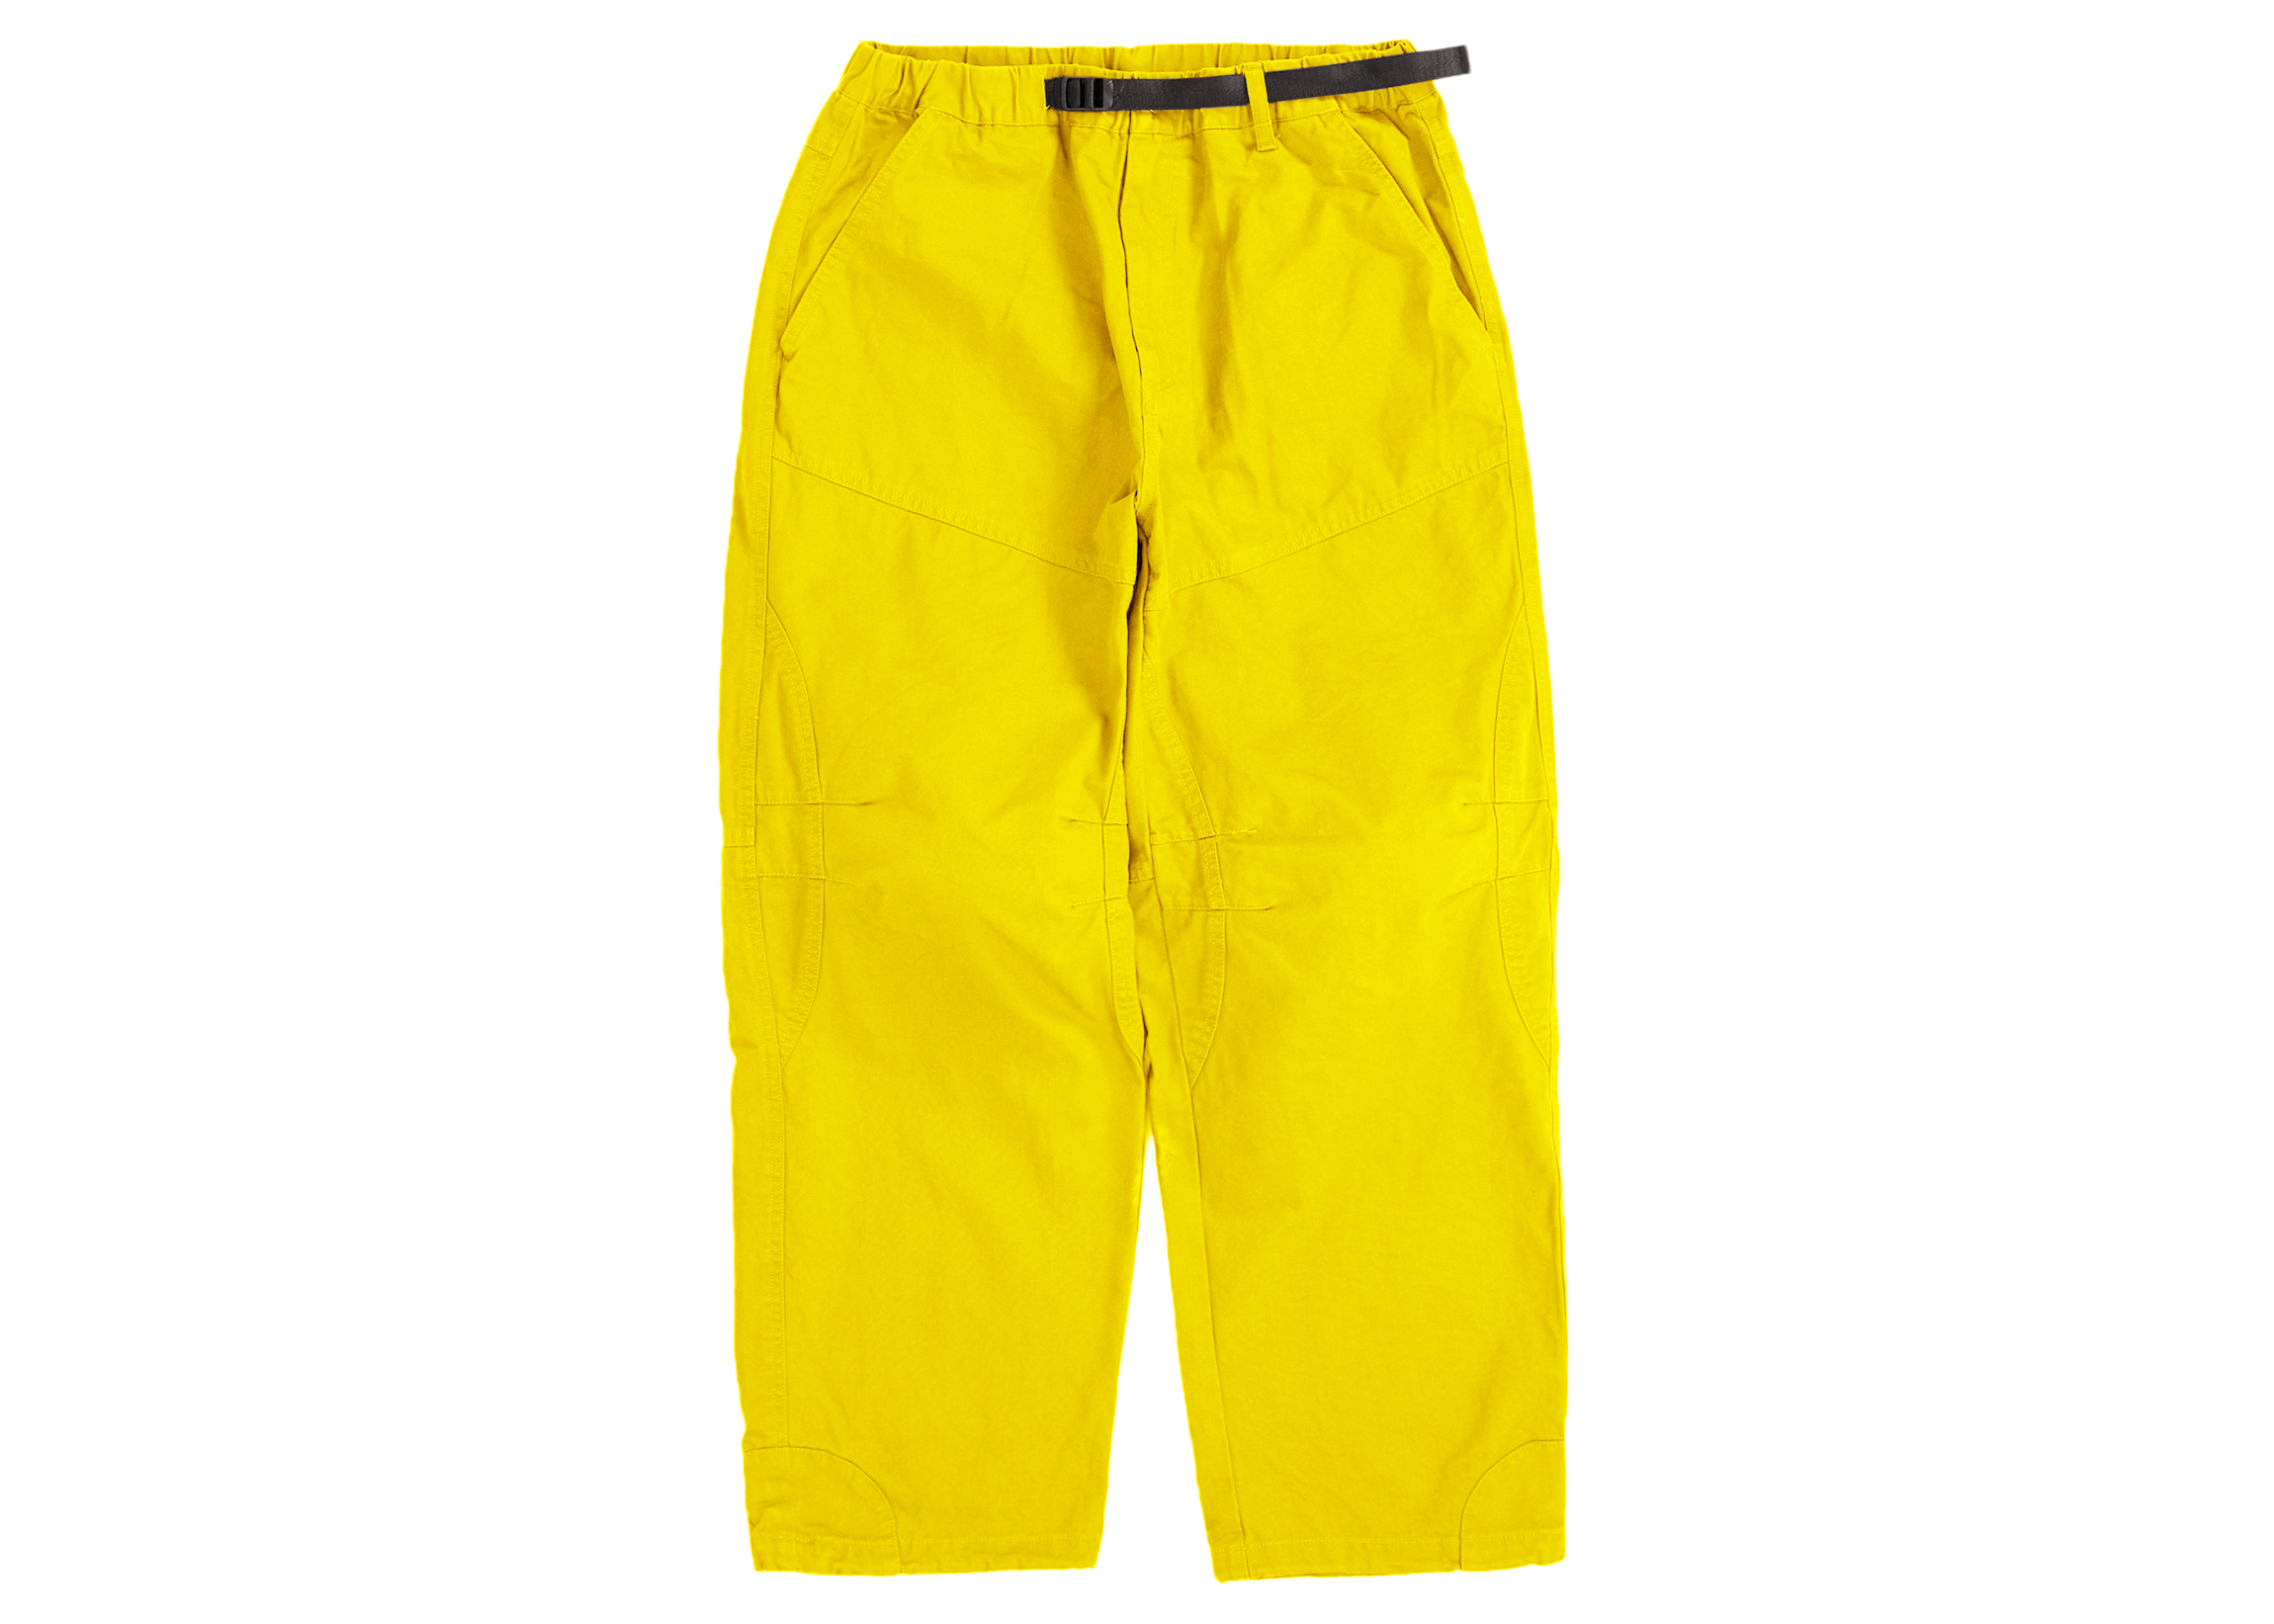 Supreme Cotton Cinch Pant Yellow 32-